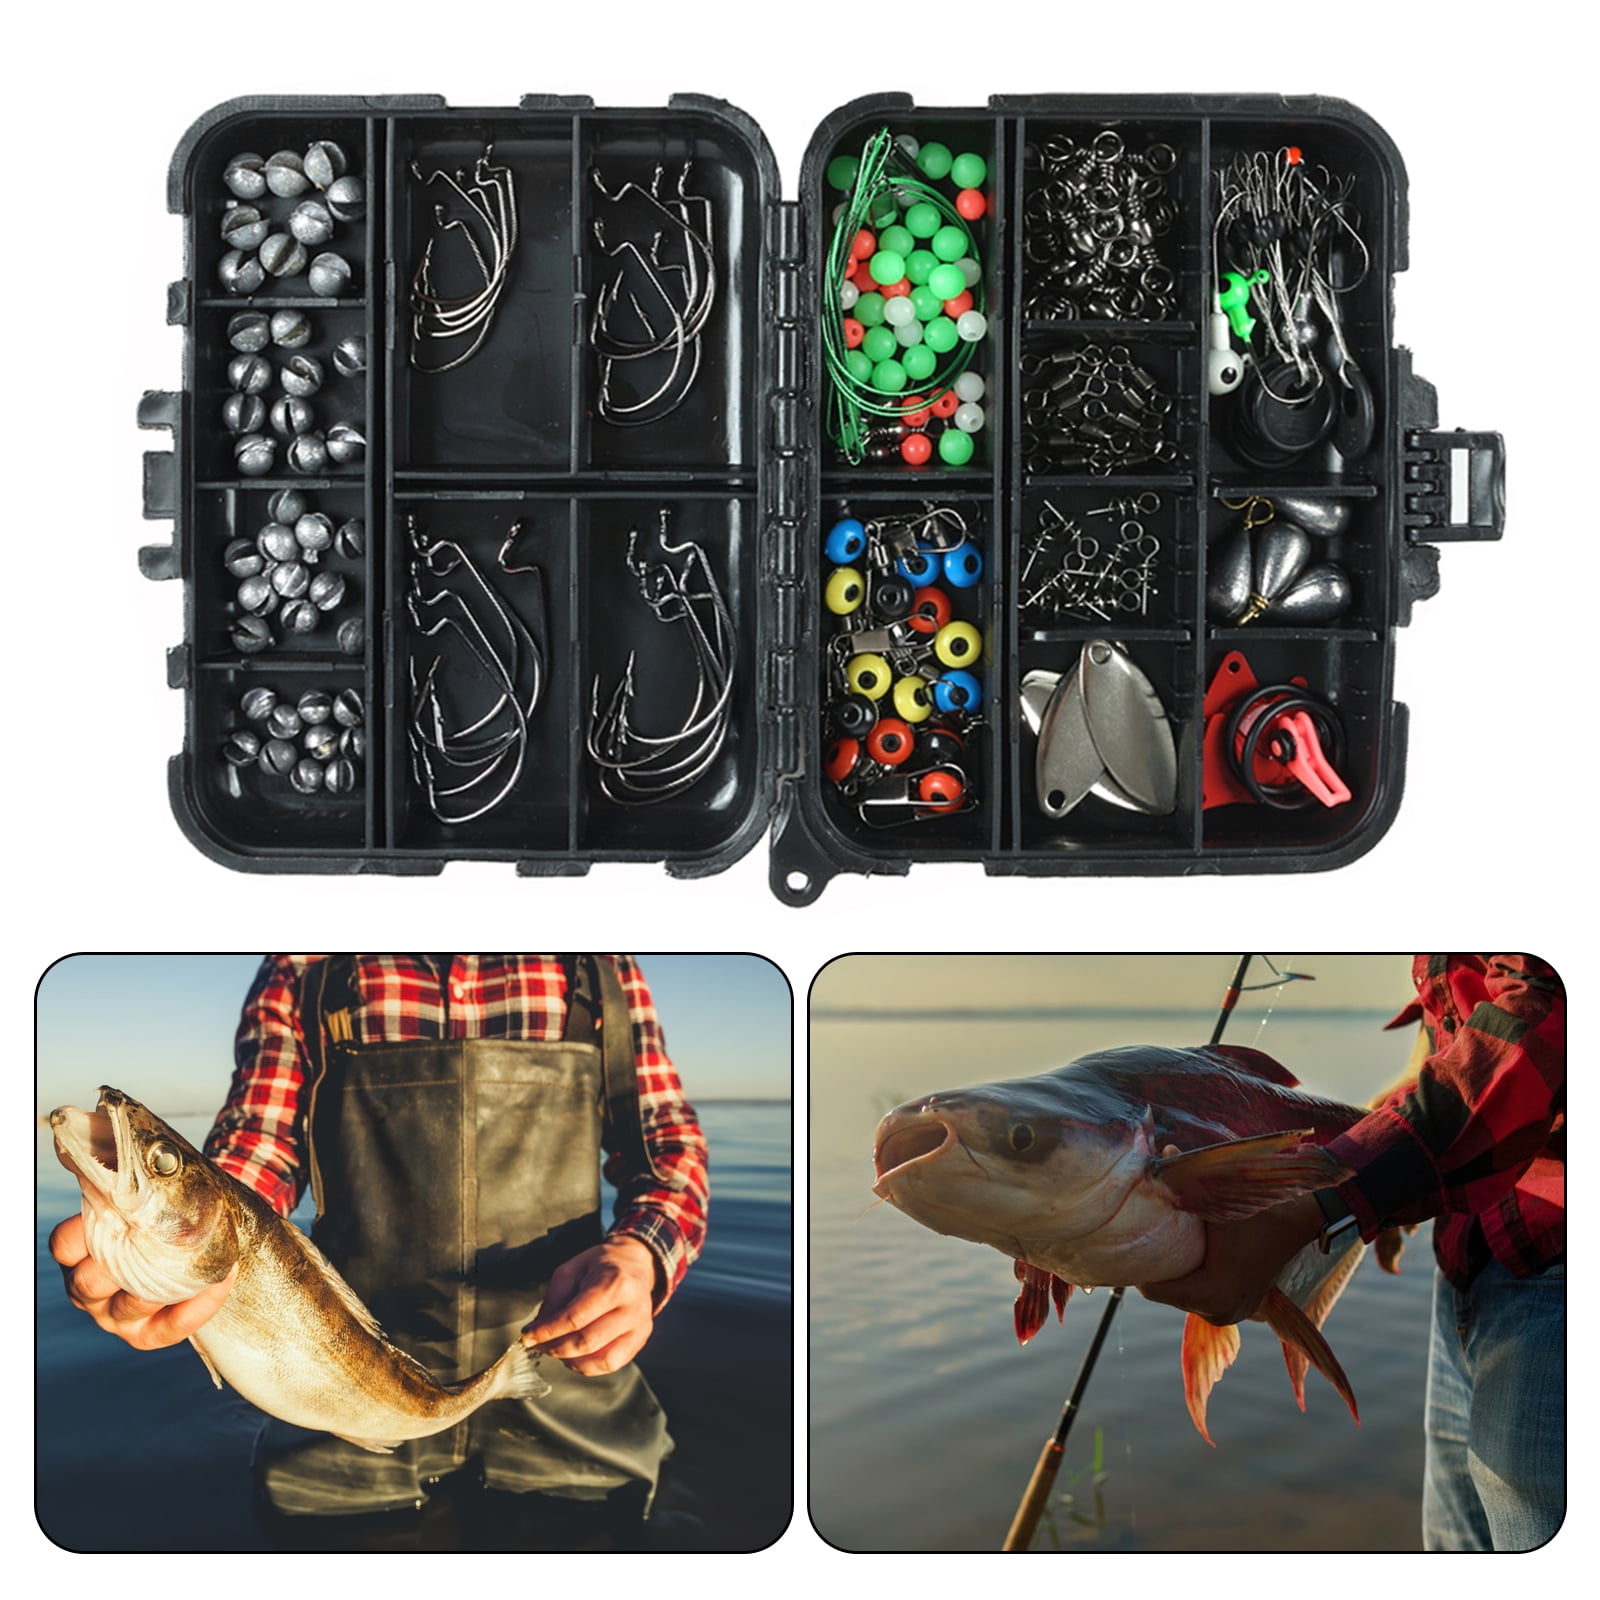 RUNCL 170pcs Fishing Accessories Kit Including Jig Hooks fishing